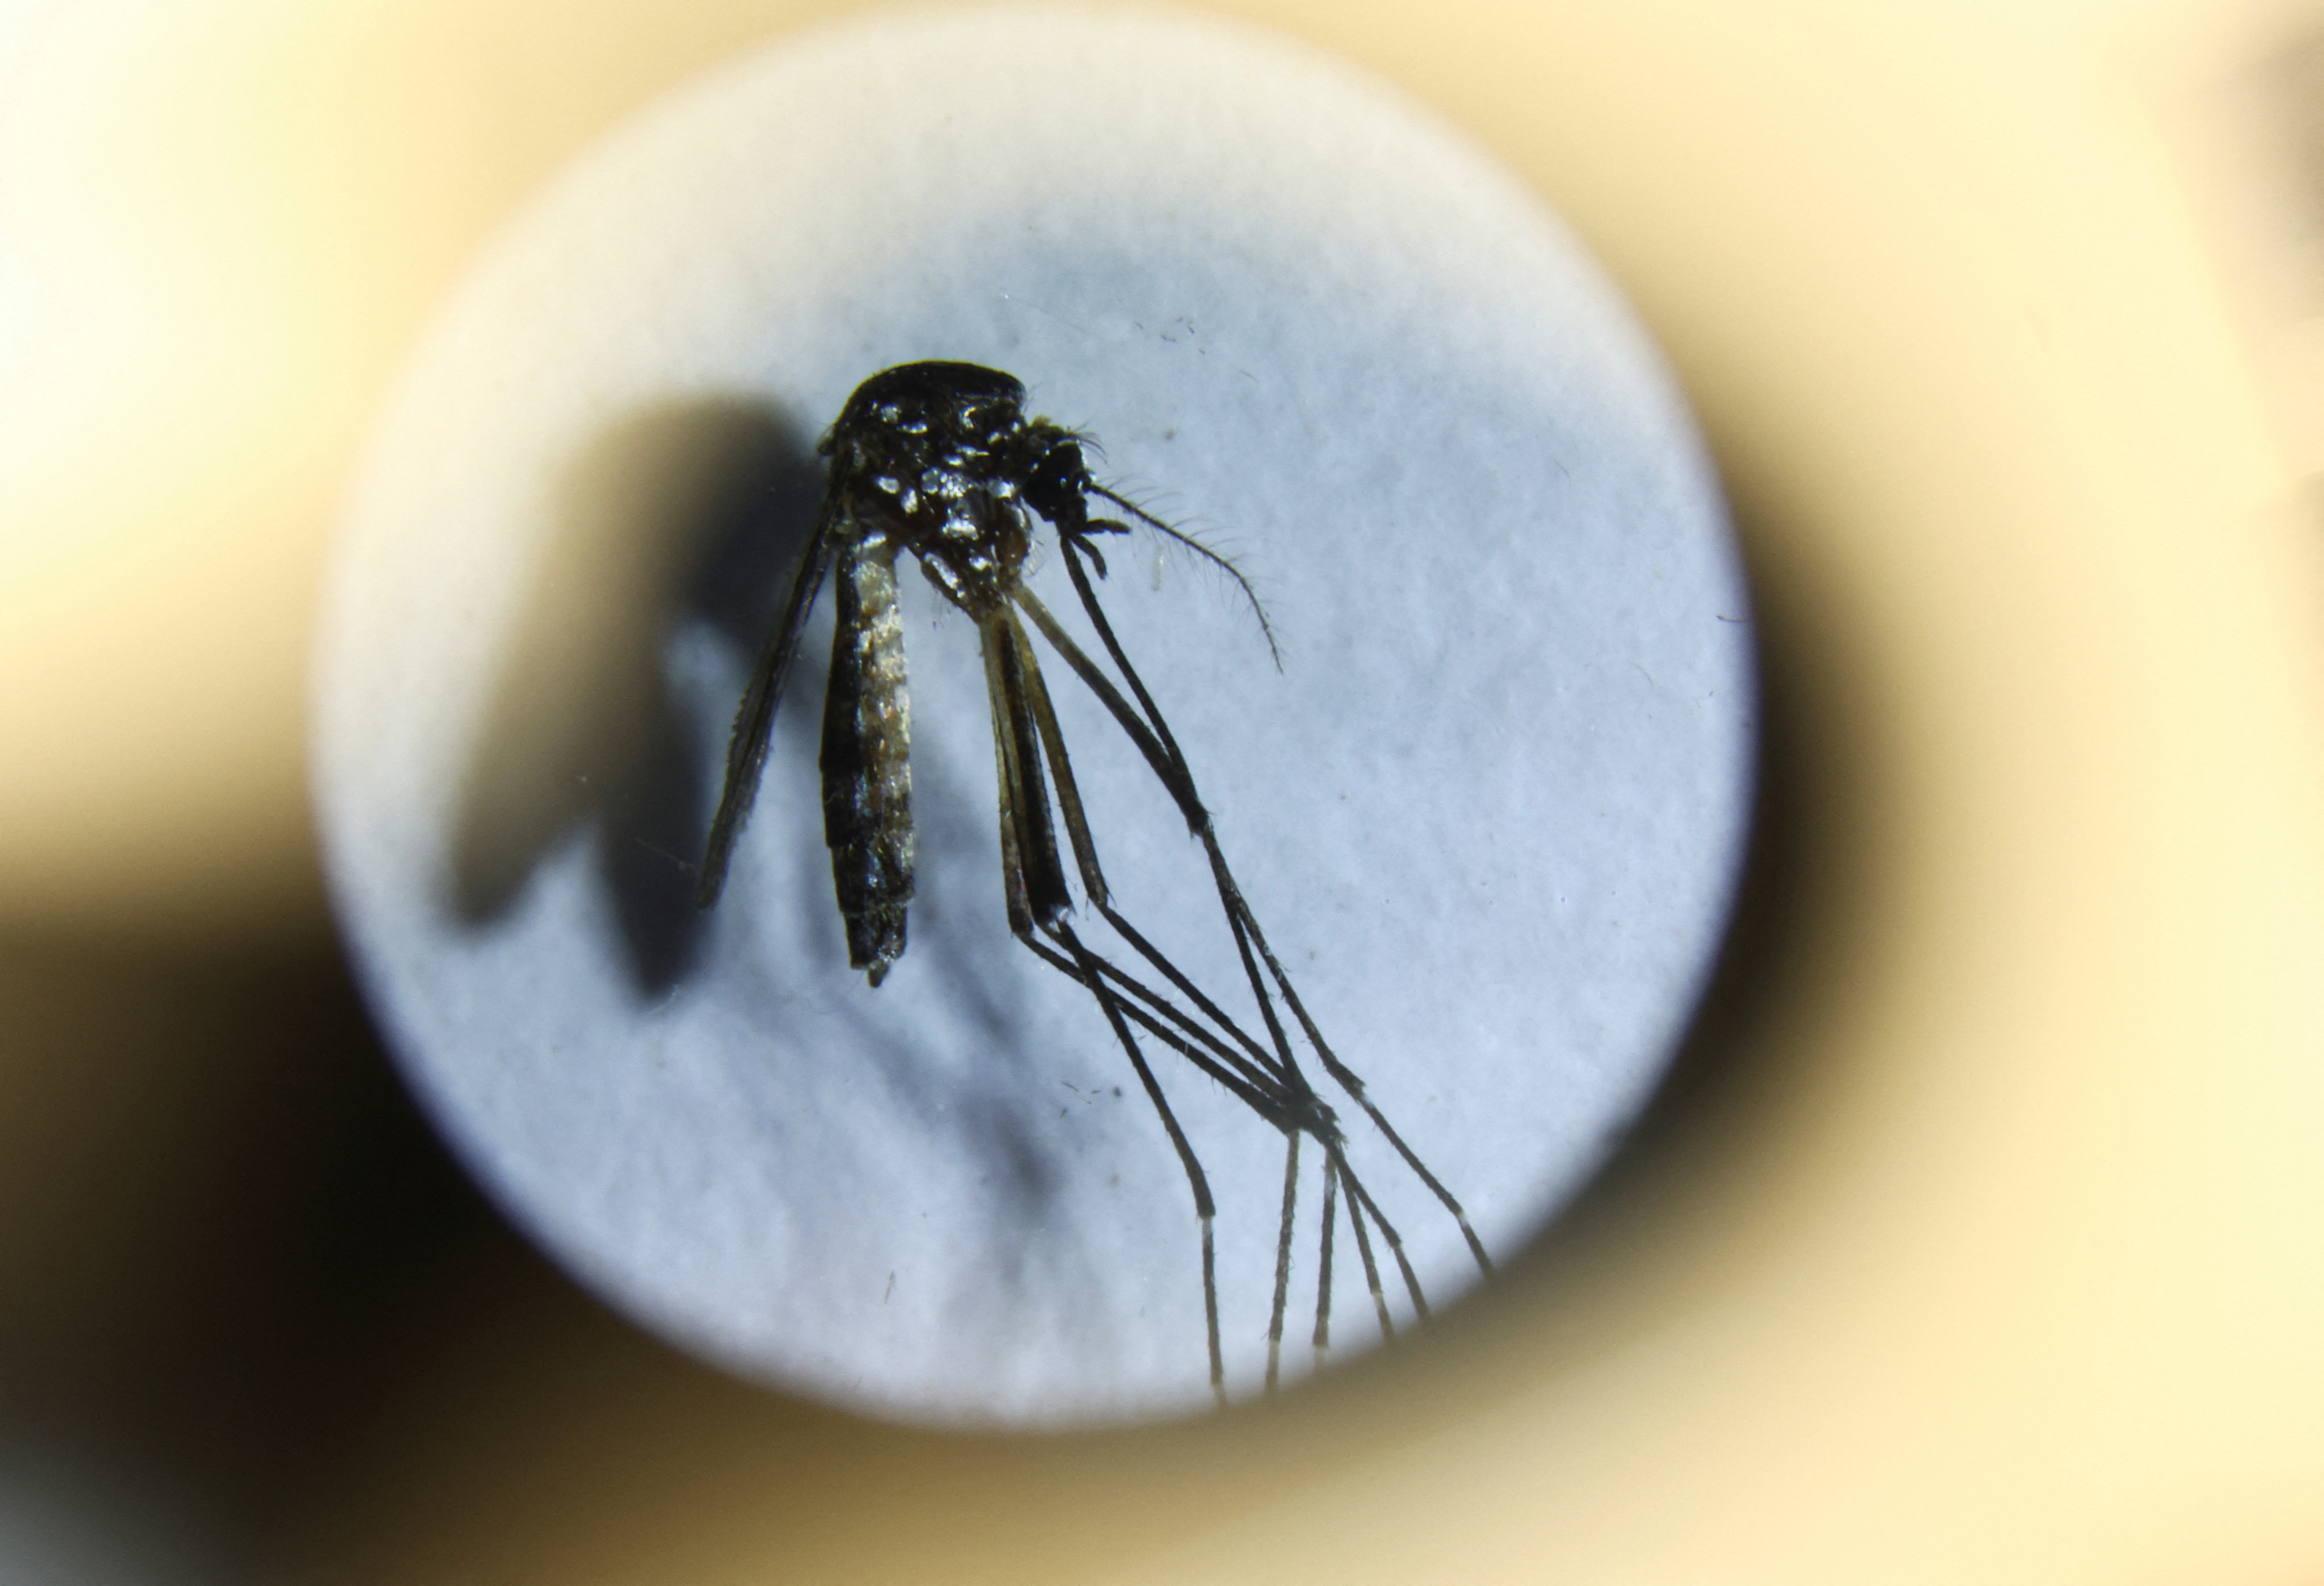 Argentina undergoes “major outbreak of dengue" as cases spike